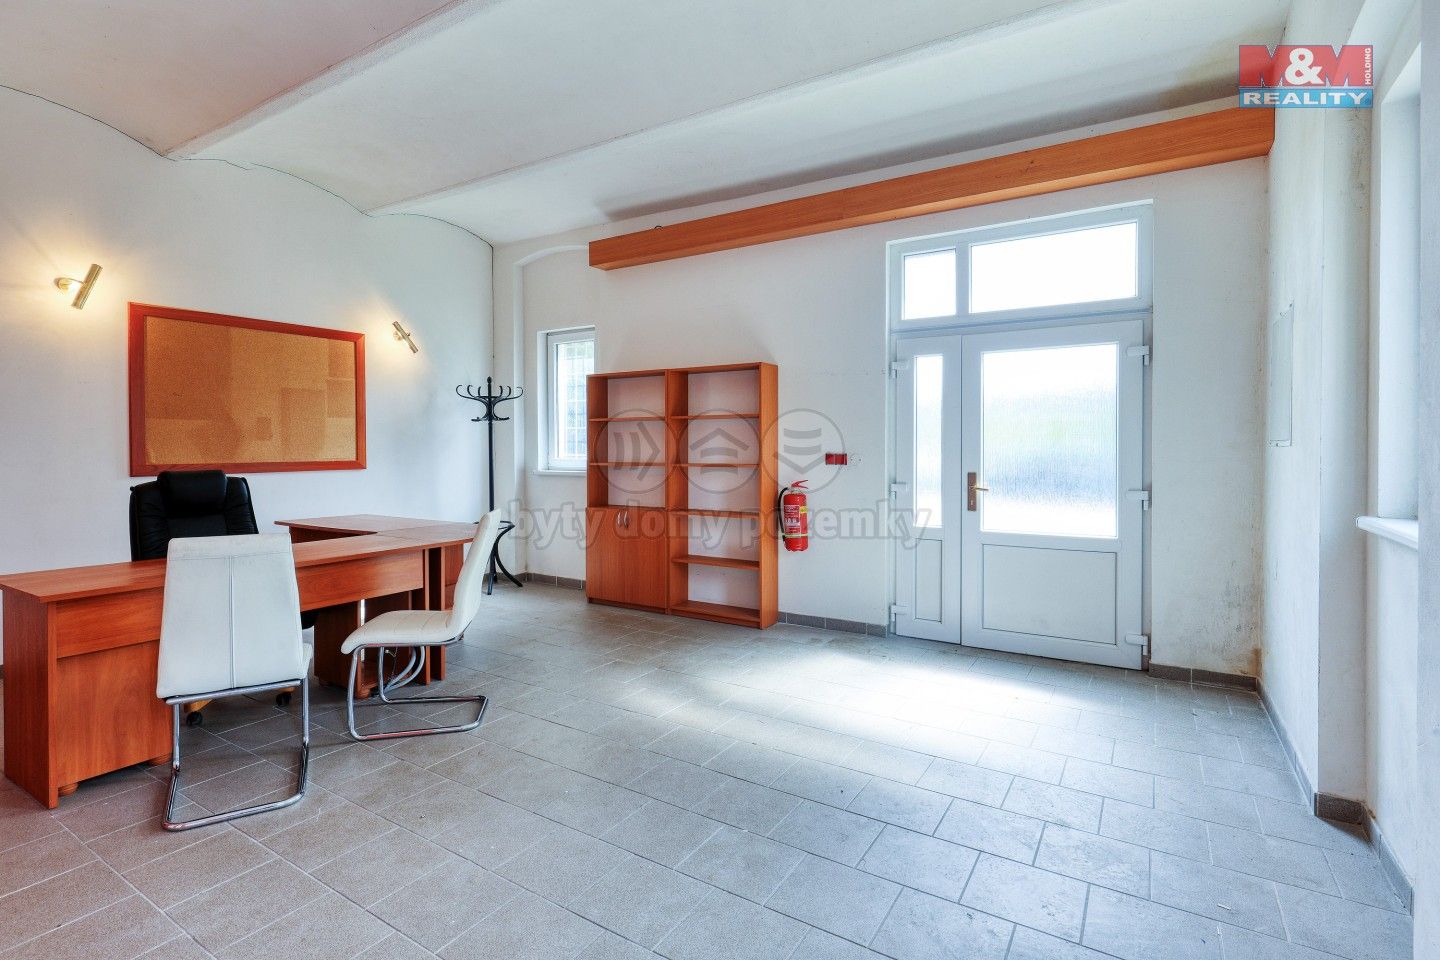 Prodej kancelář - Chebská, Karlovy Vary, 100 m²